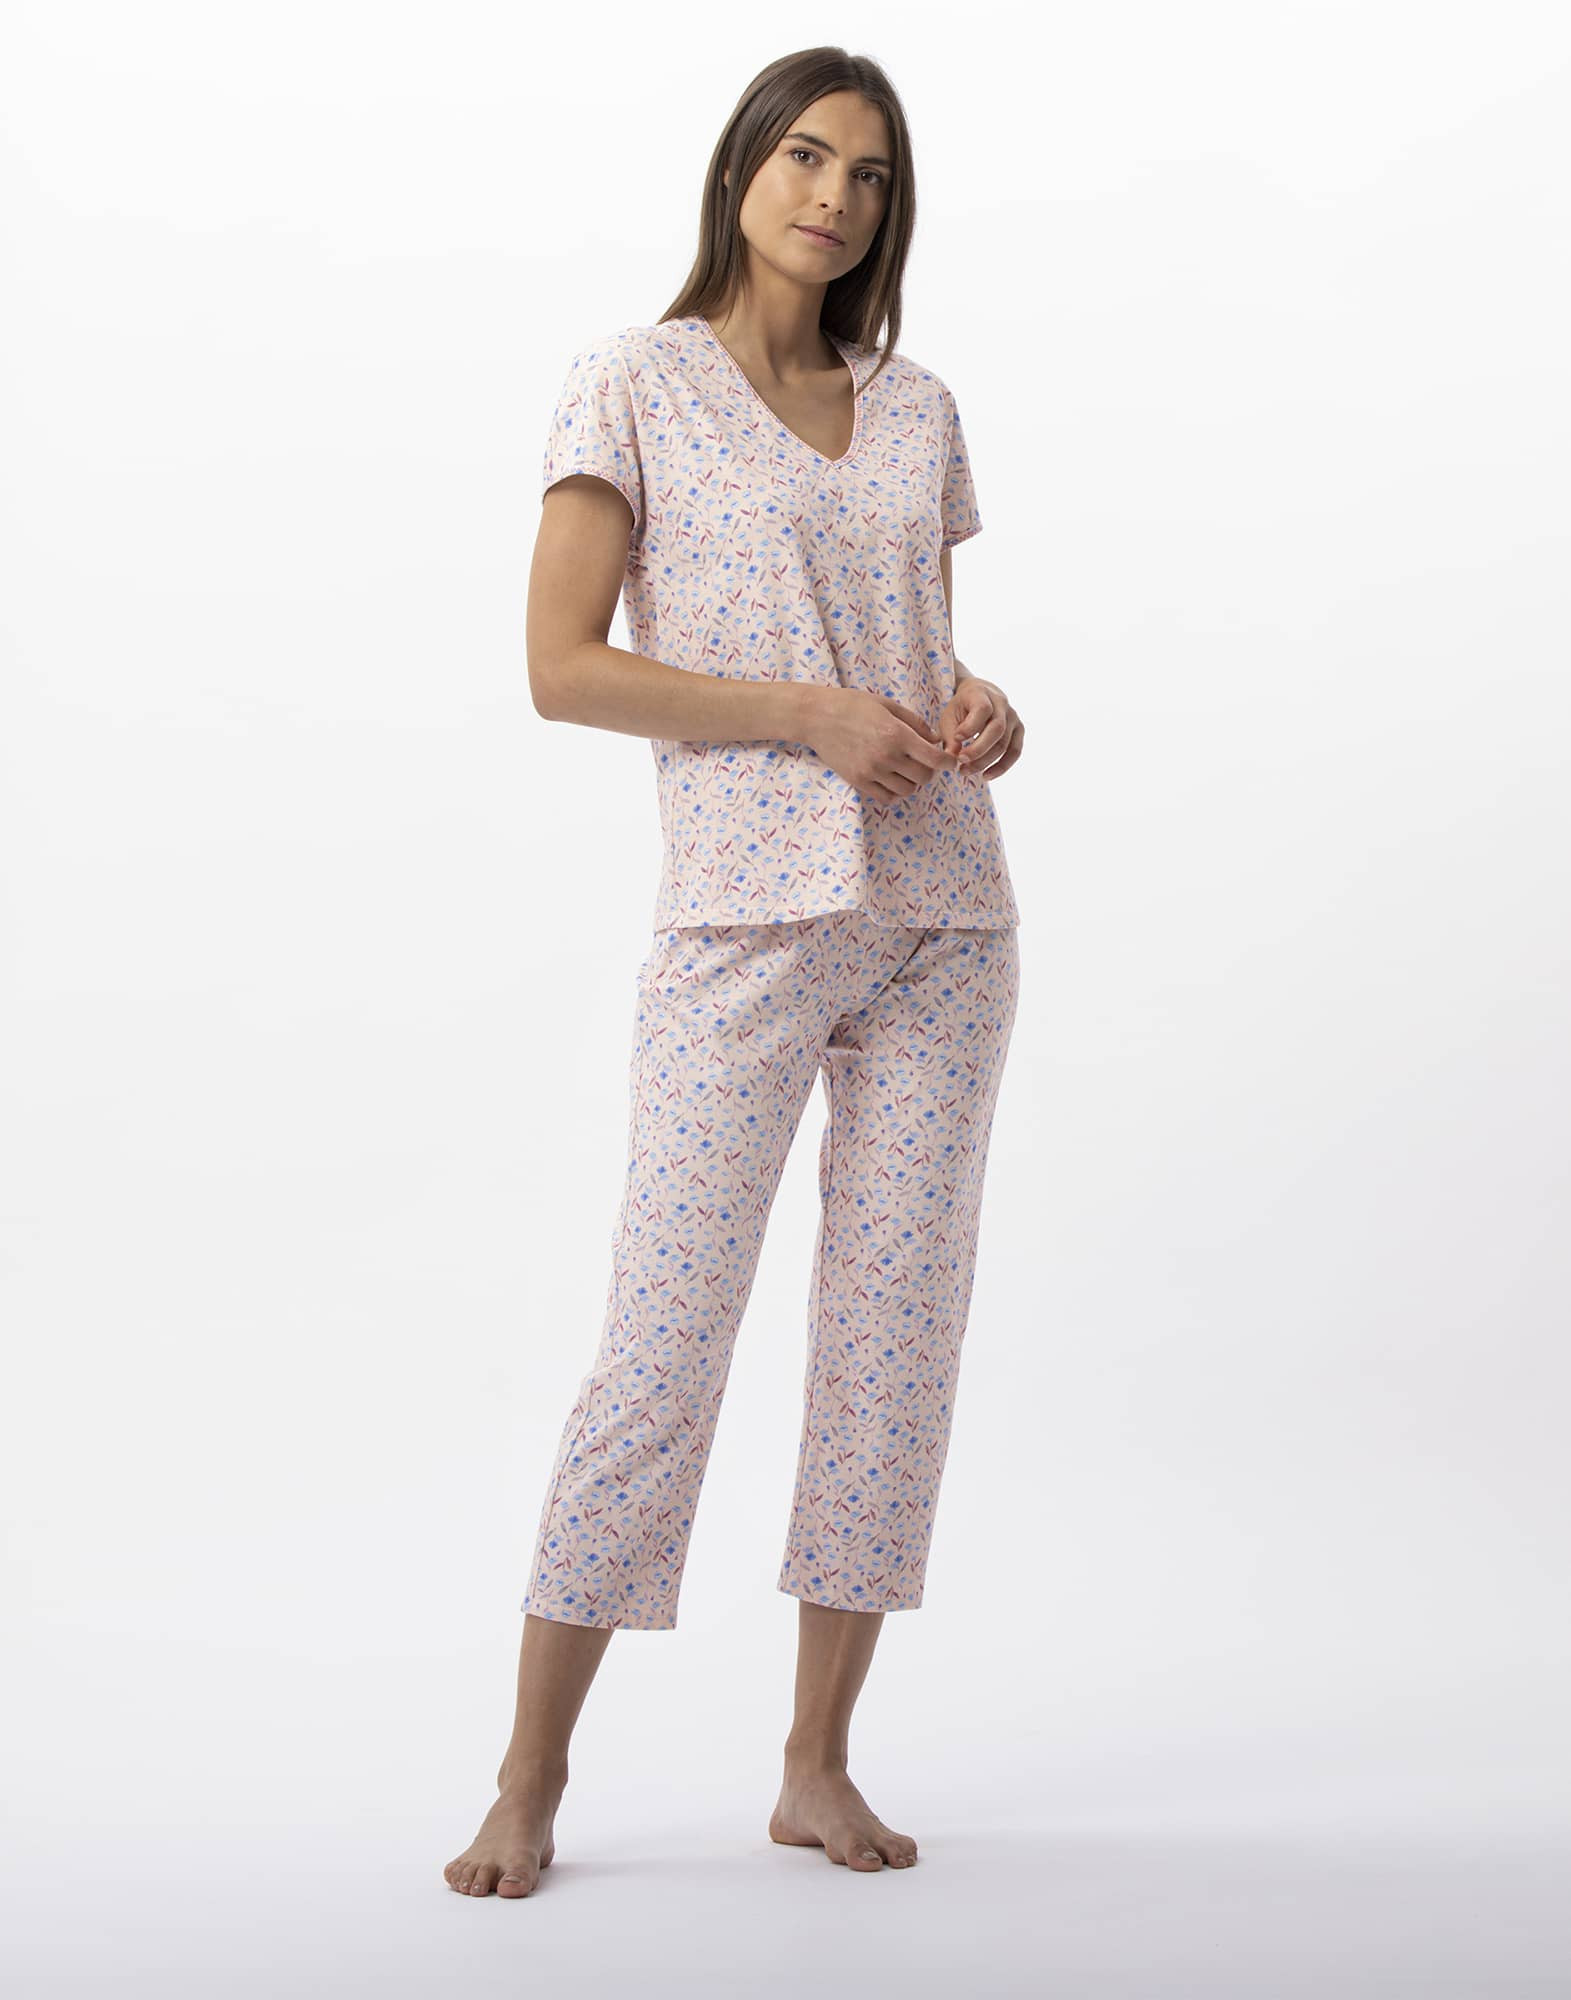 Pyjama pantacourt en coton ANGIE 702 multico